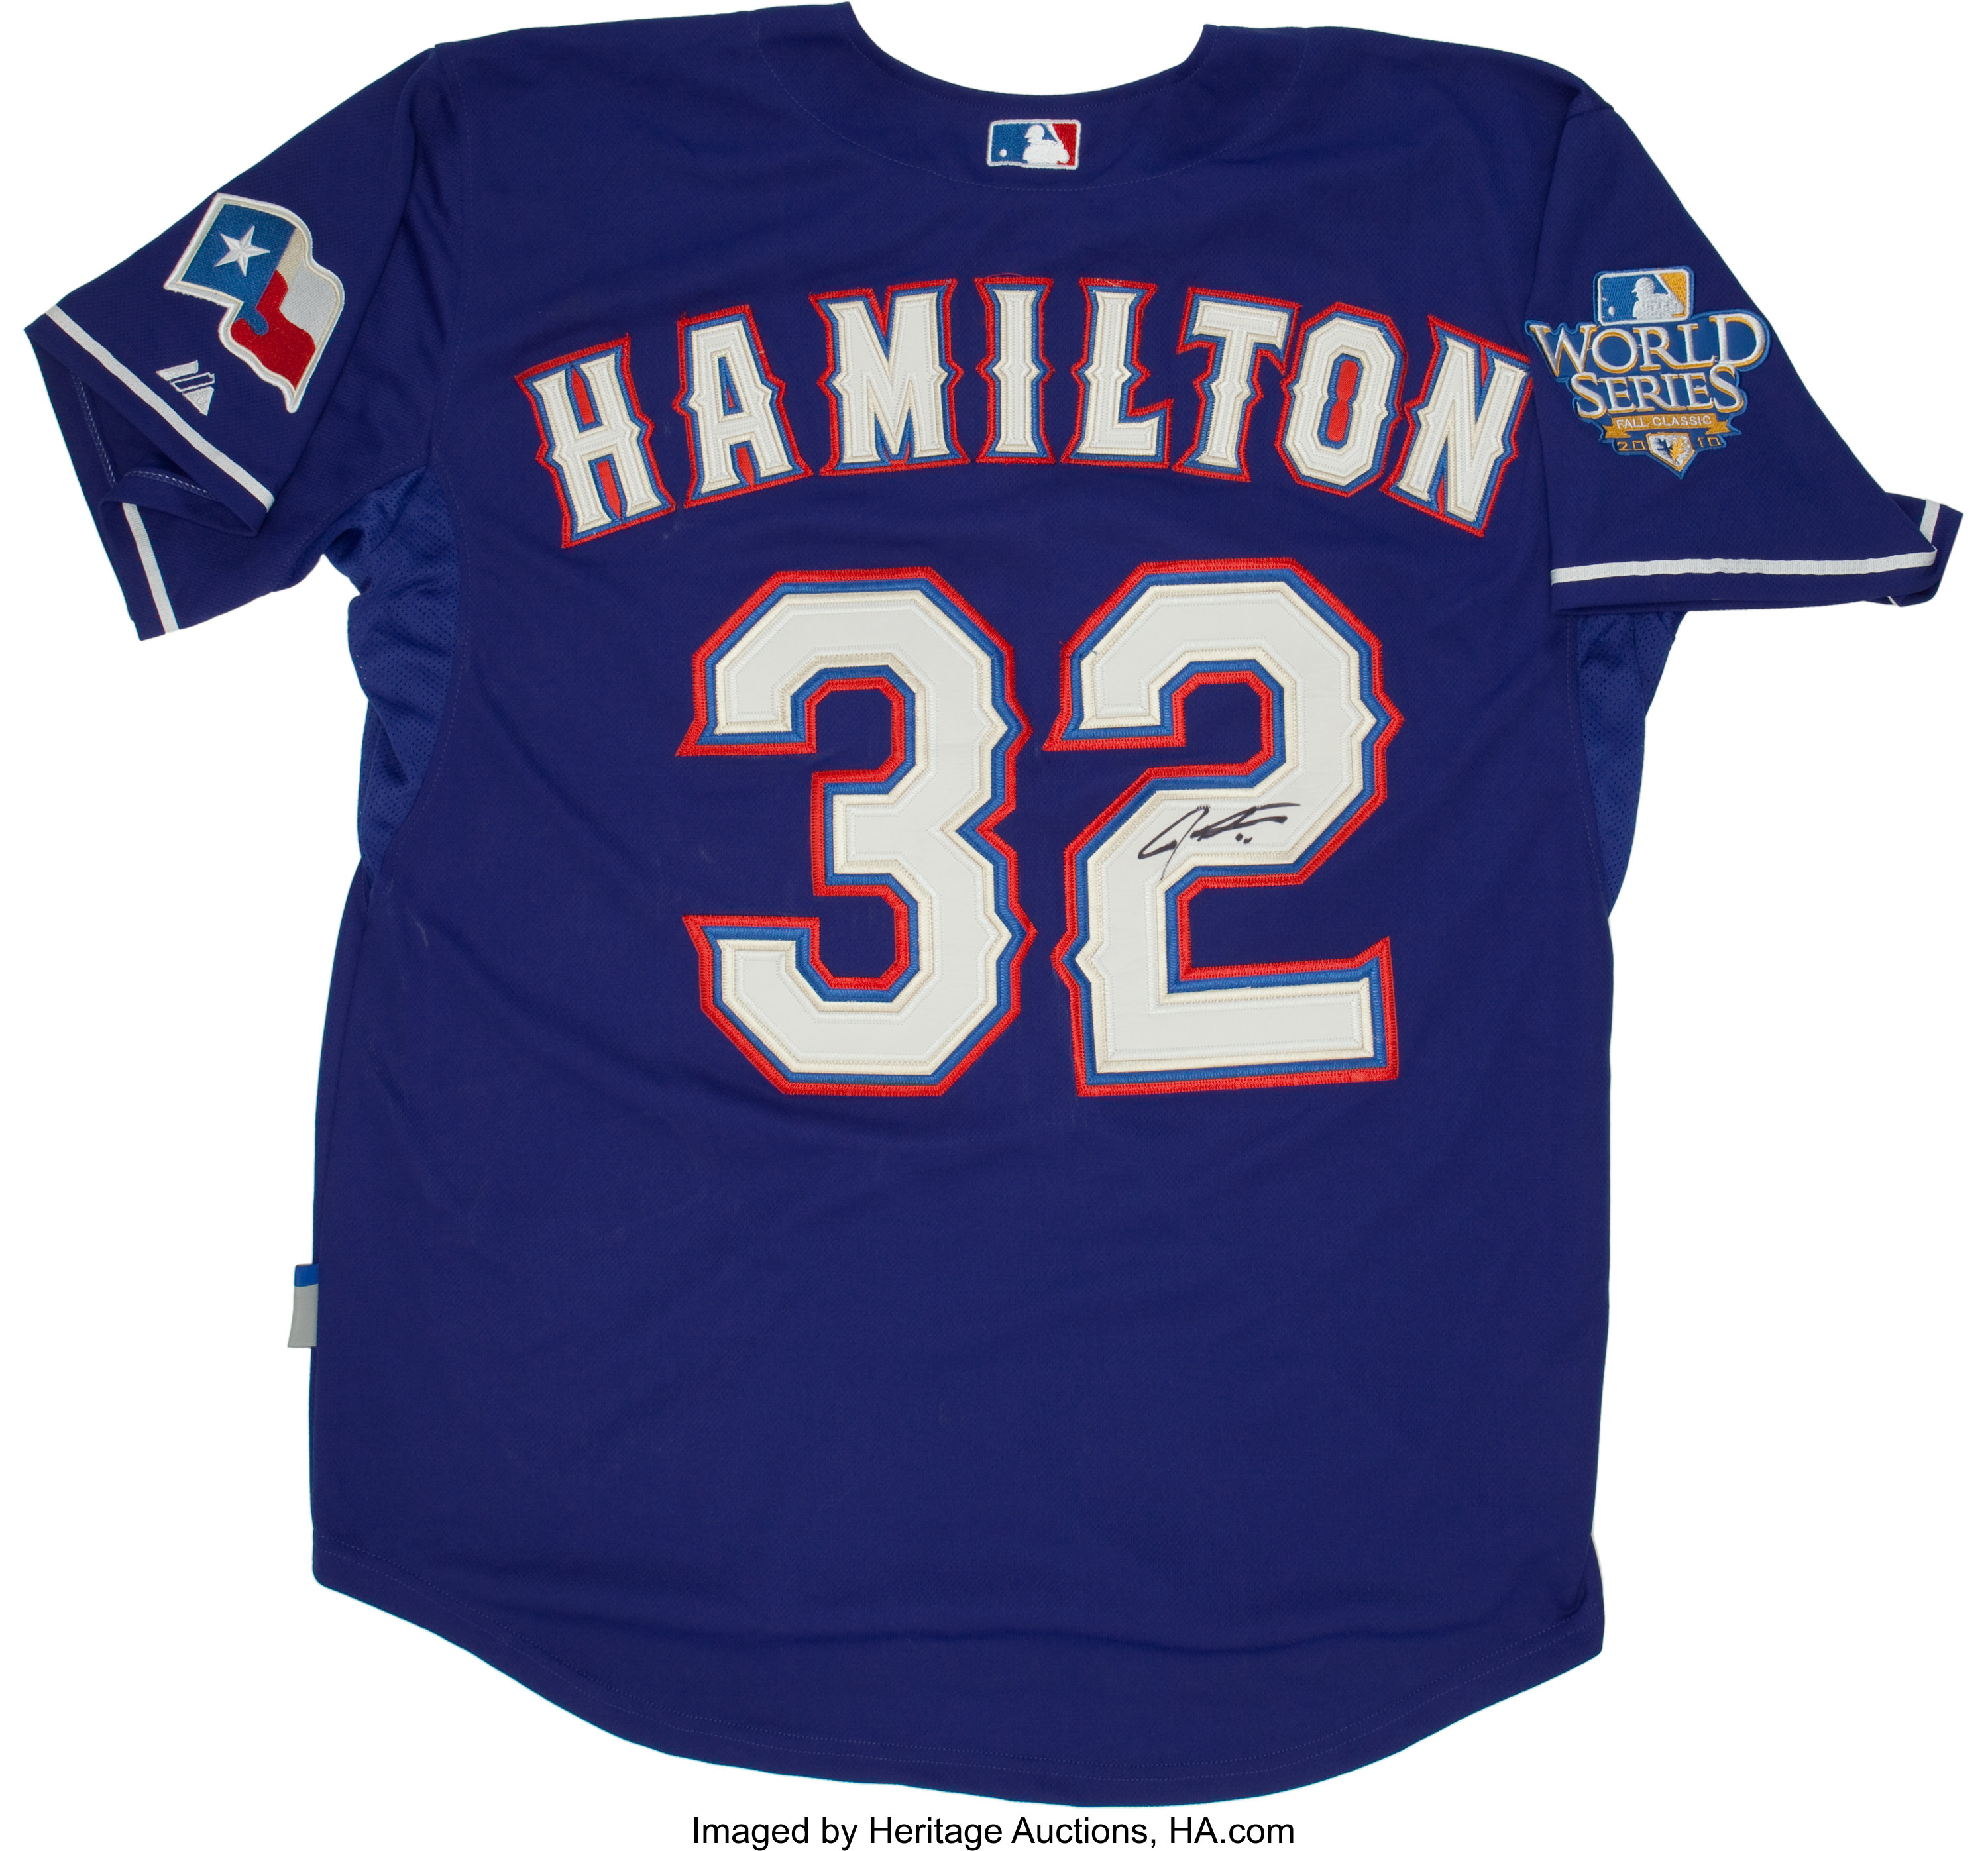 Josh Hamilton Signed Jersey. Baseball Collectibles Uniforms